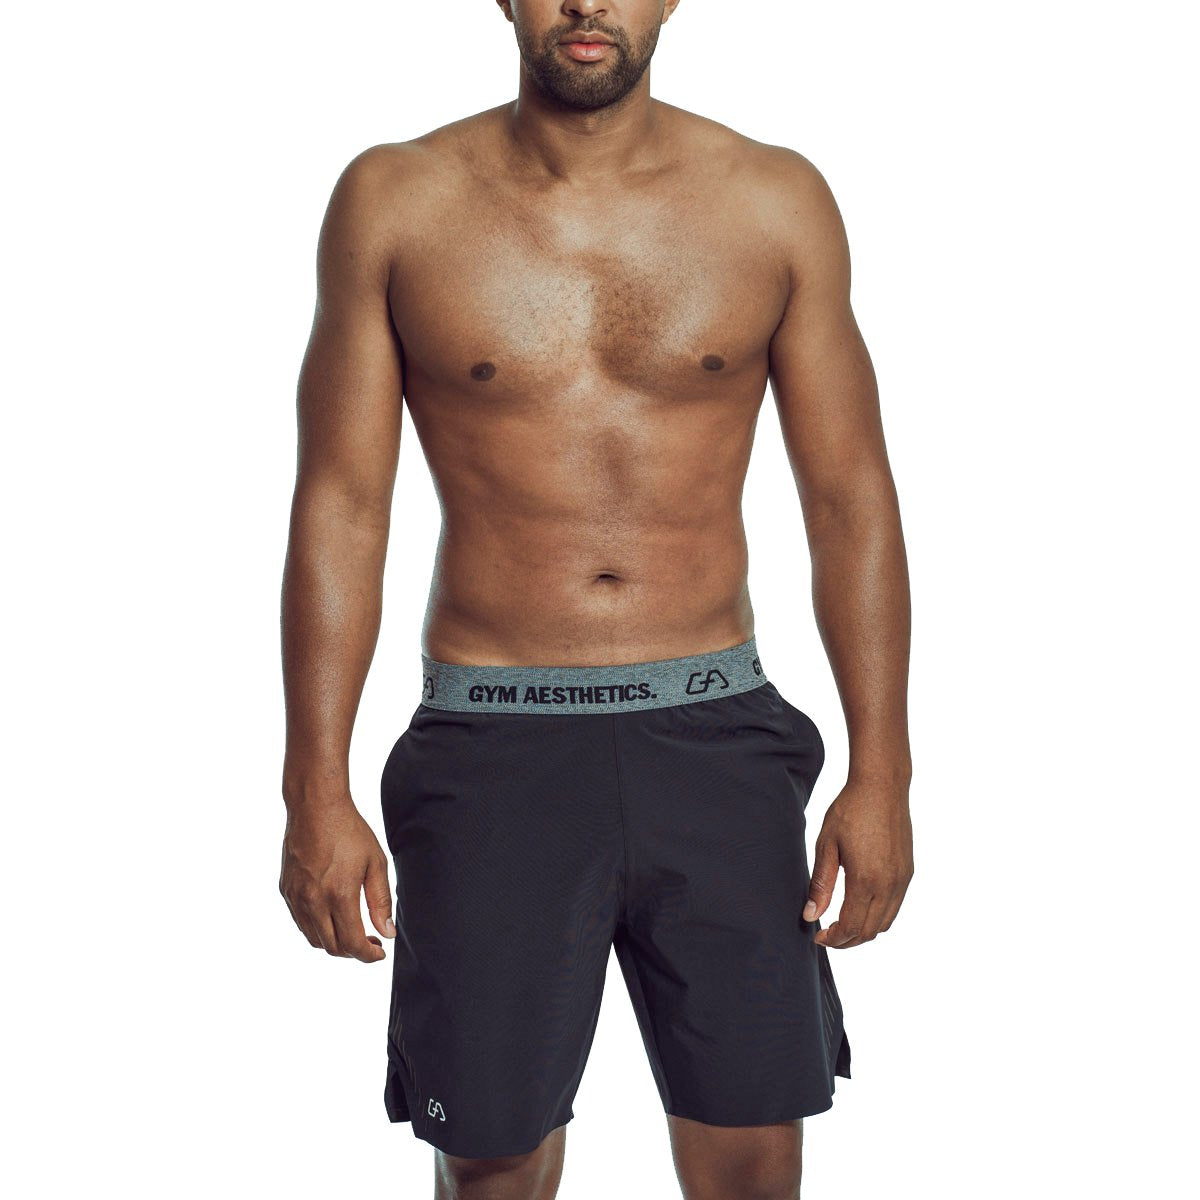 Functional Sports Shorts Intensity for Men | Gym Aesthetics